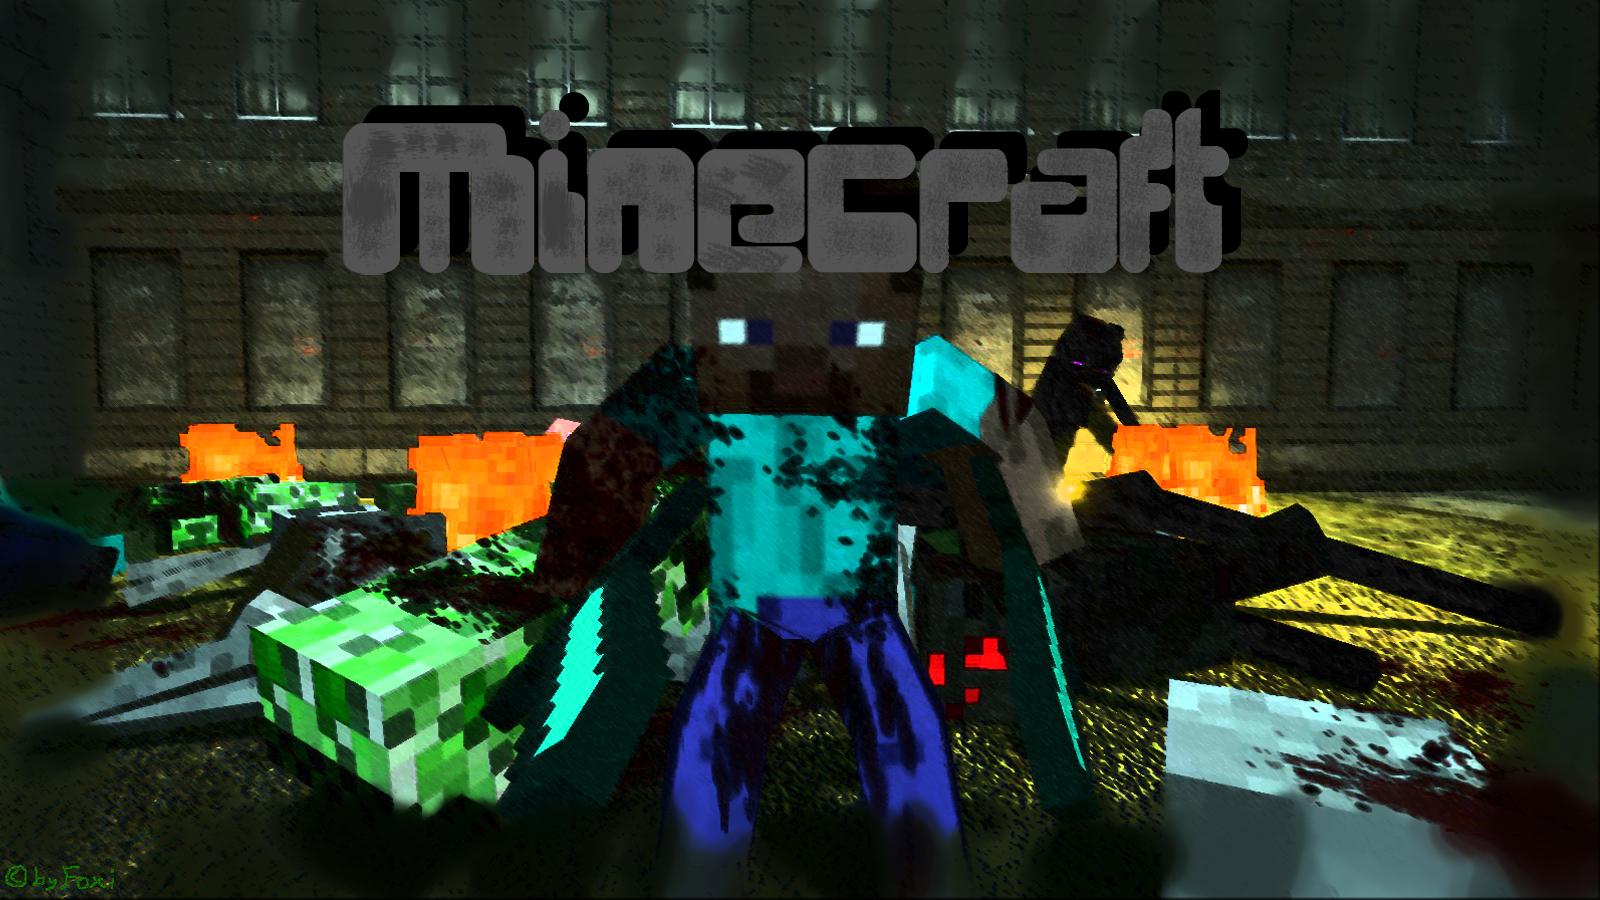 71] Cool Minecraft Background on